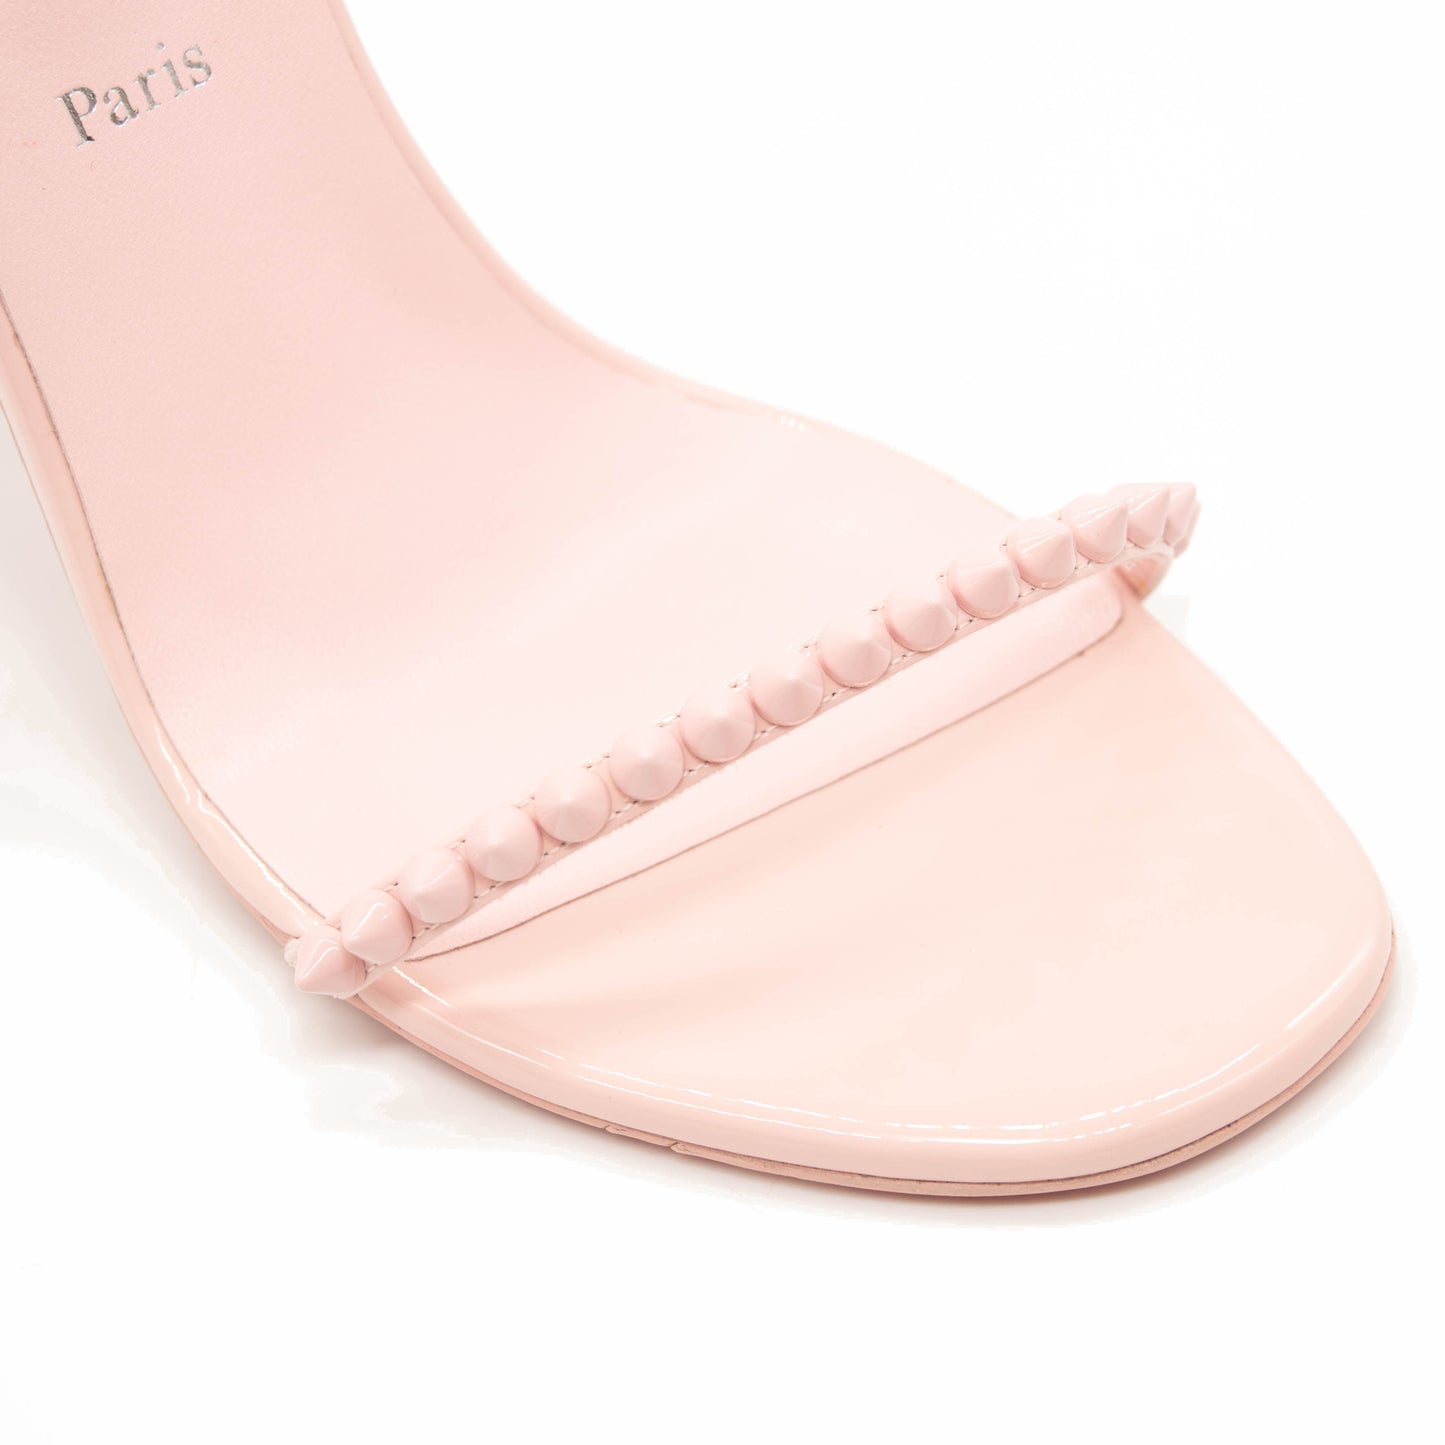 NEW Christian Louboutin So Me Ankle Strap Sandal Rosy Pink EU 36.5 Pumps